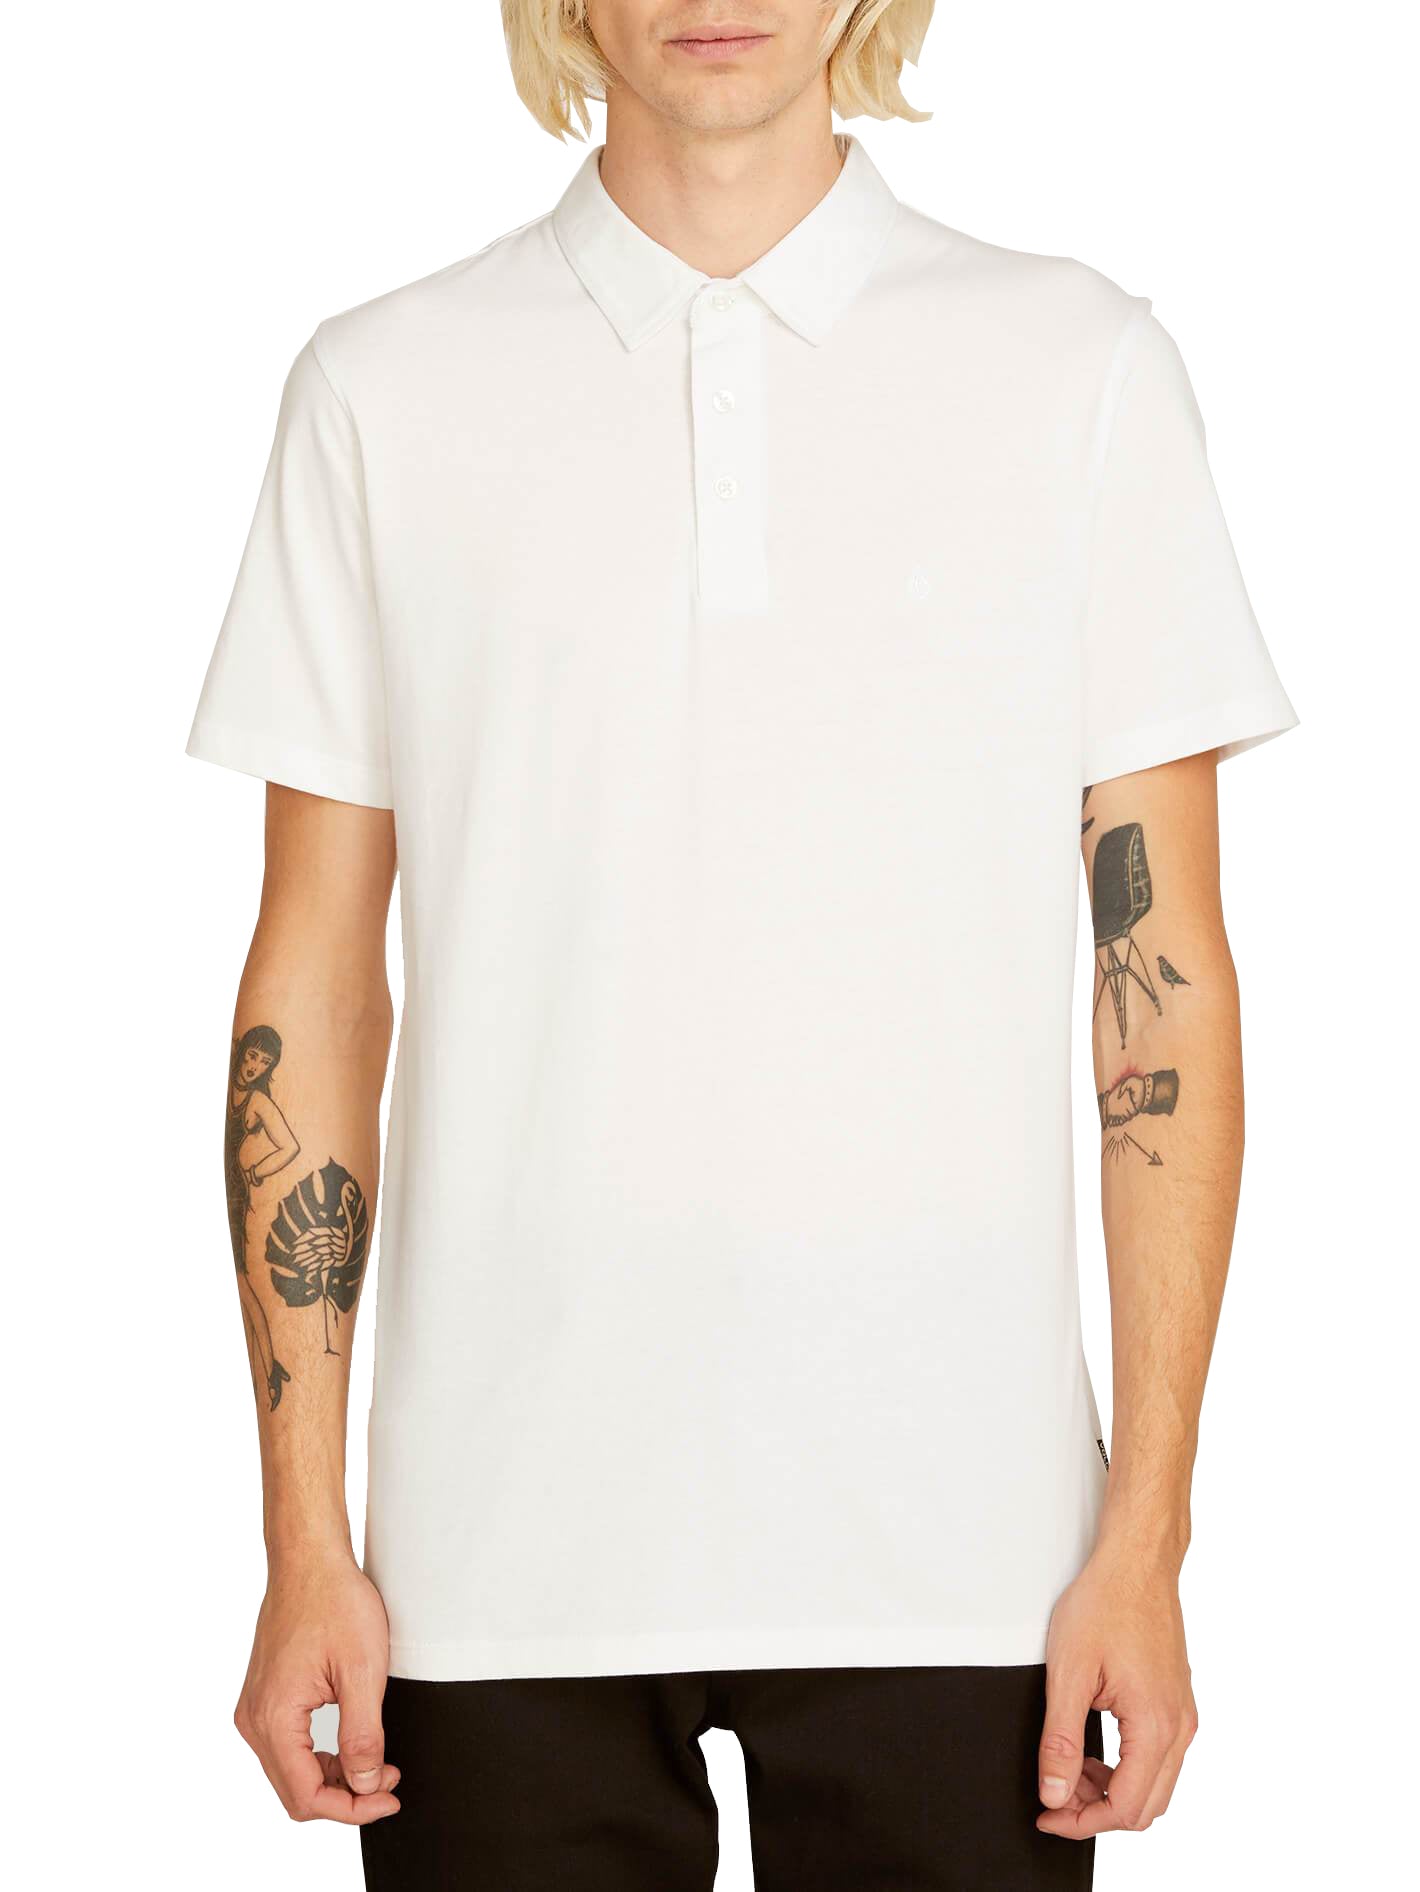 Volcom Wowzer Polo S/S Shirt White XL